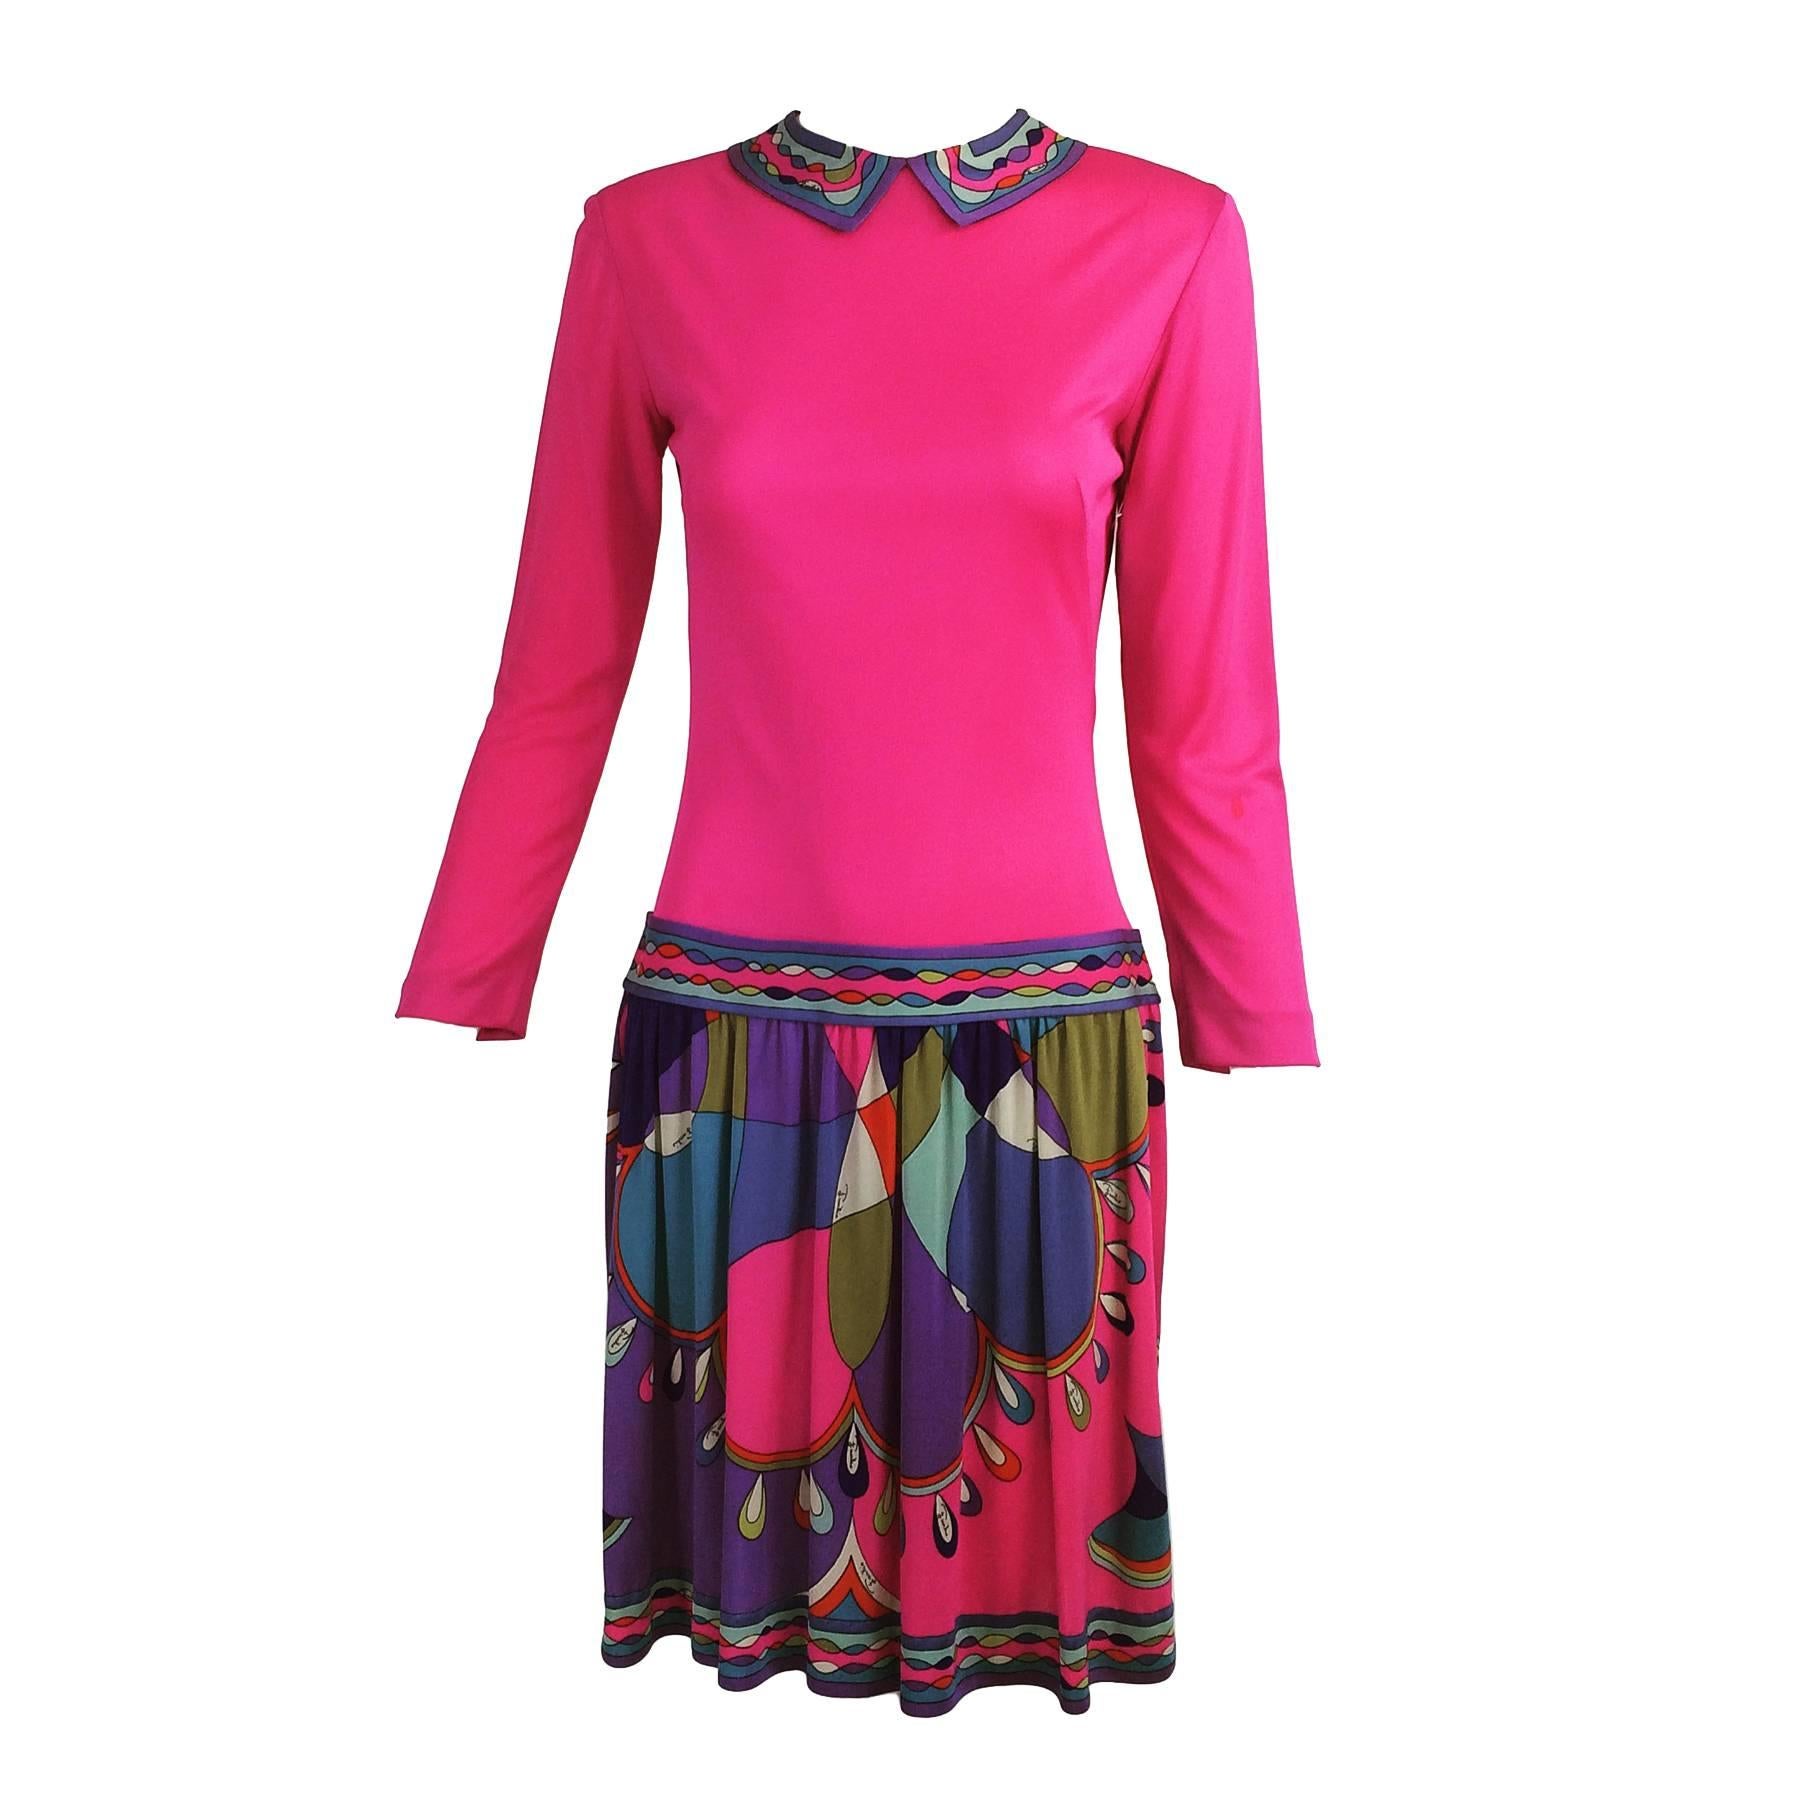 Pucci Mod silk knit dress in hot pink & classic print 1960s